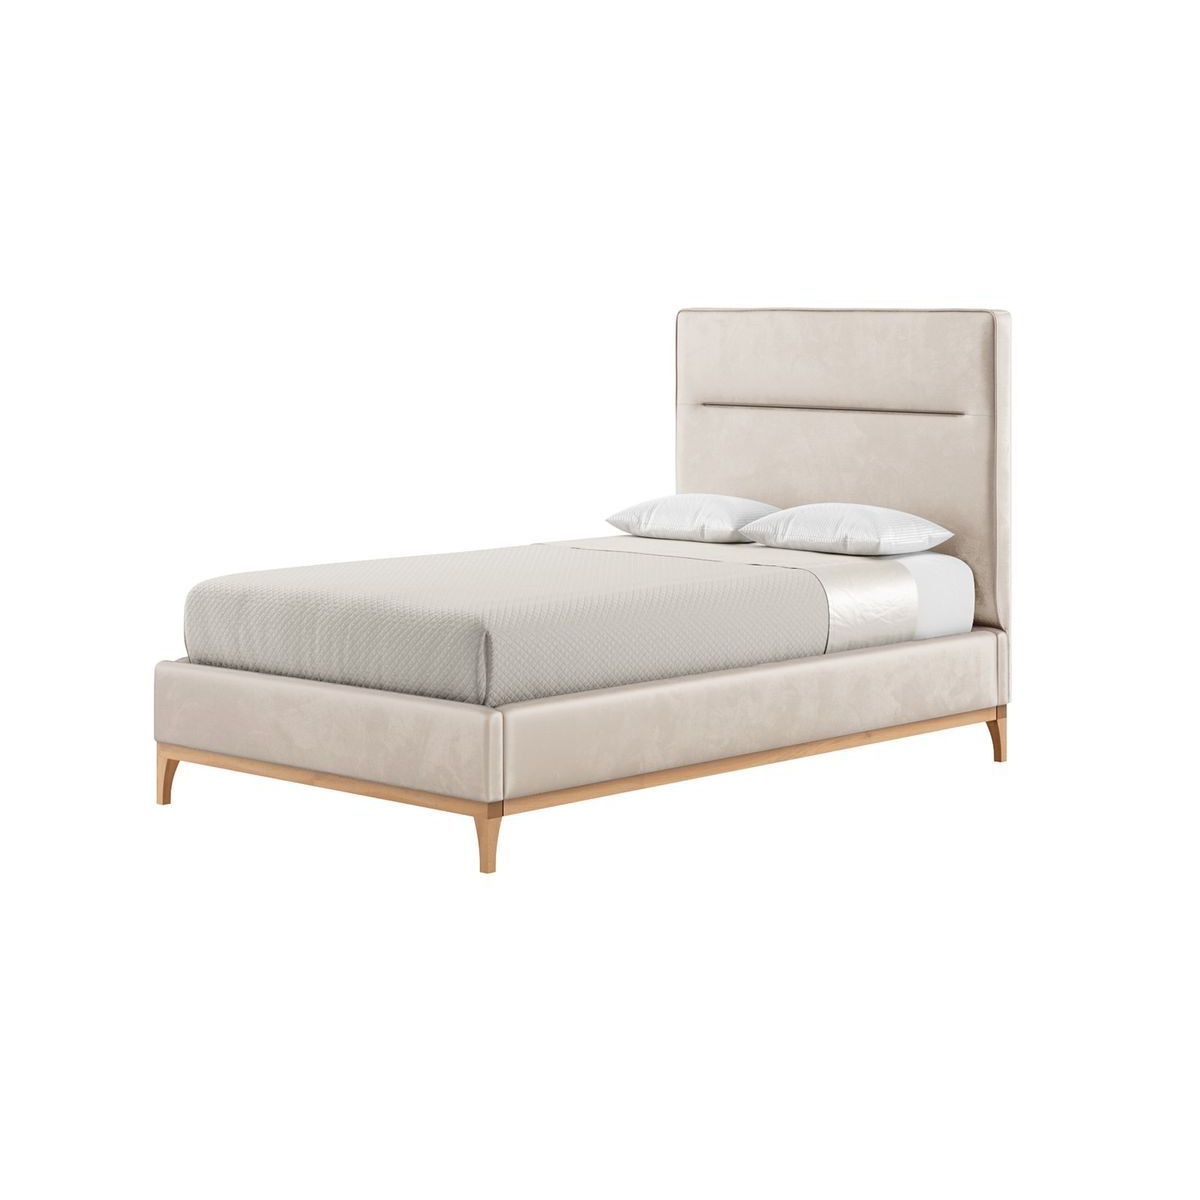 Gene 4ft Small Double Bed Frame with modern horizontal stitch headboard, light beige, Leg colour: like oak - image 1